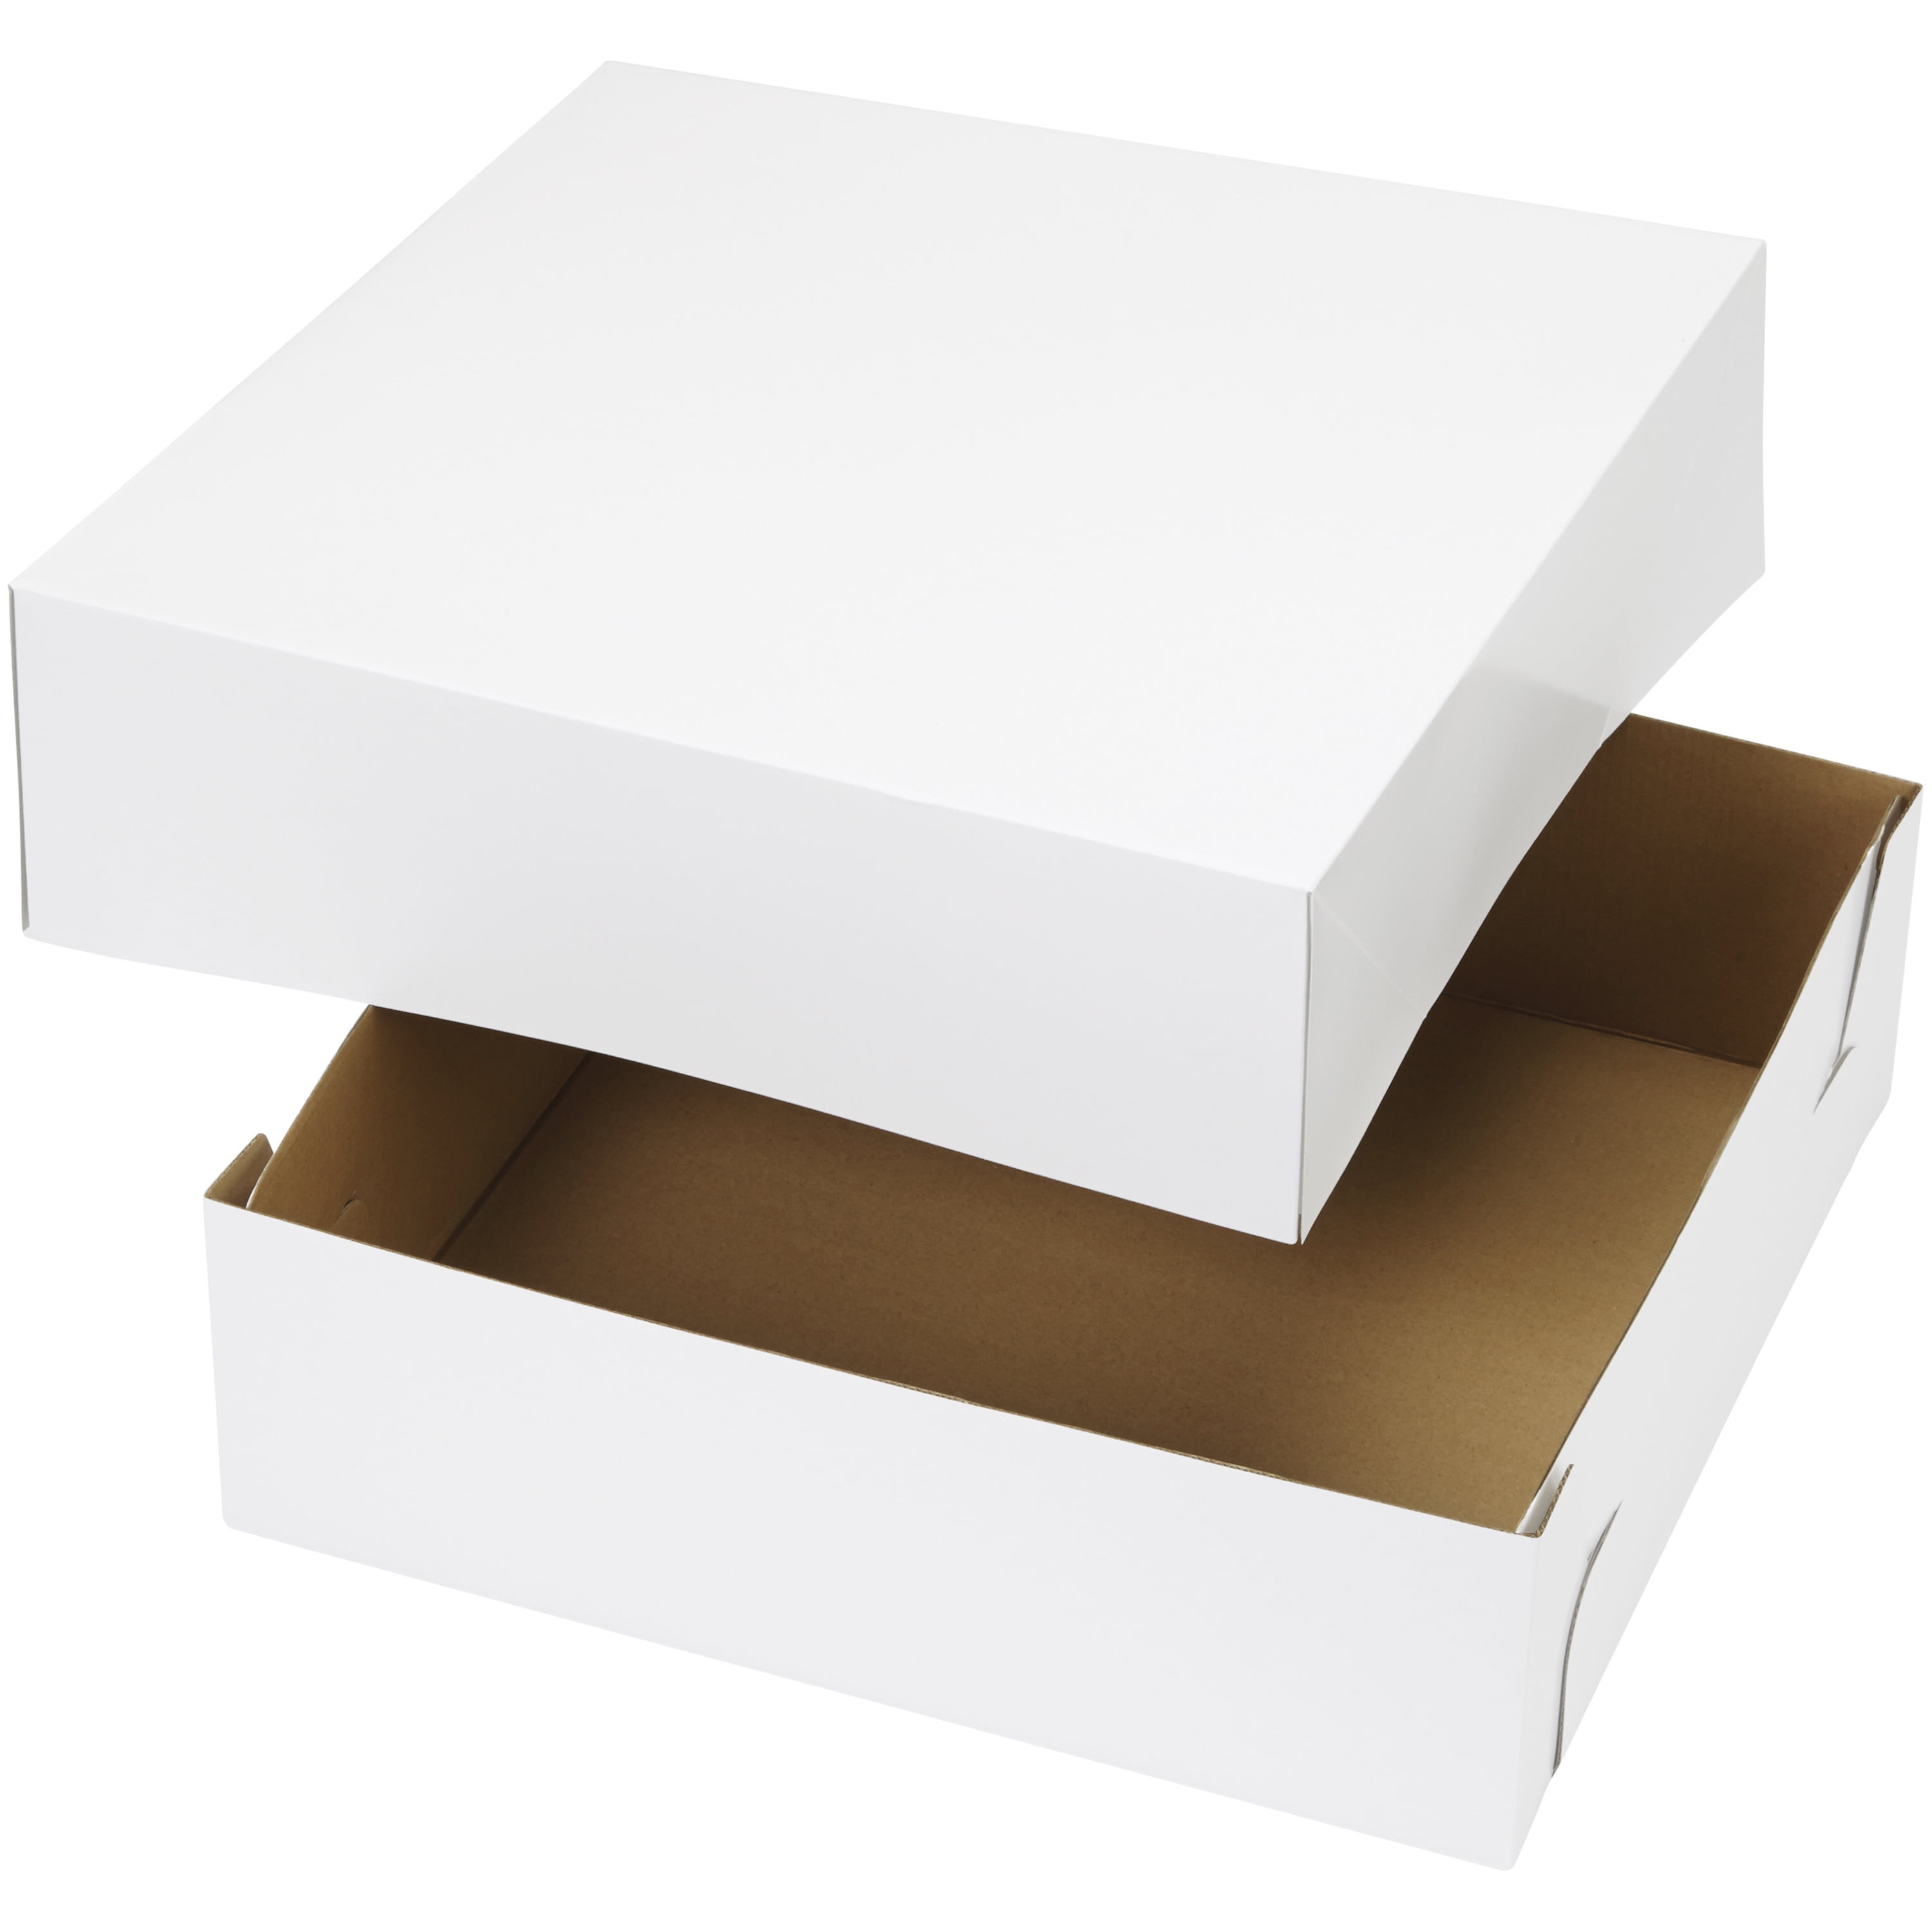 5 x 13" square standard 2 piece white cake boxes 